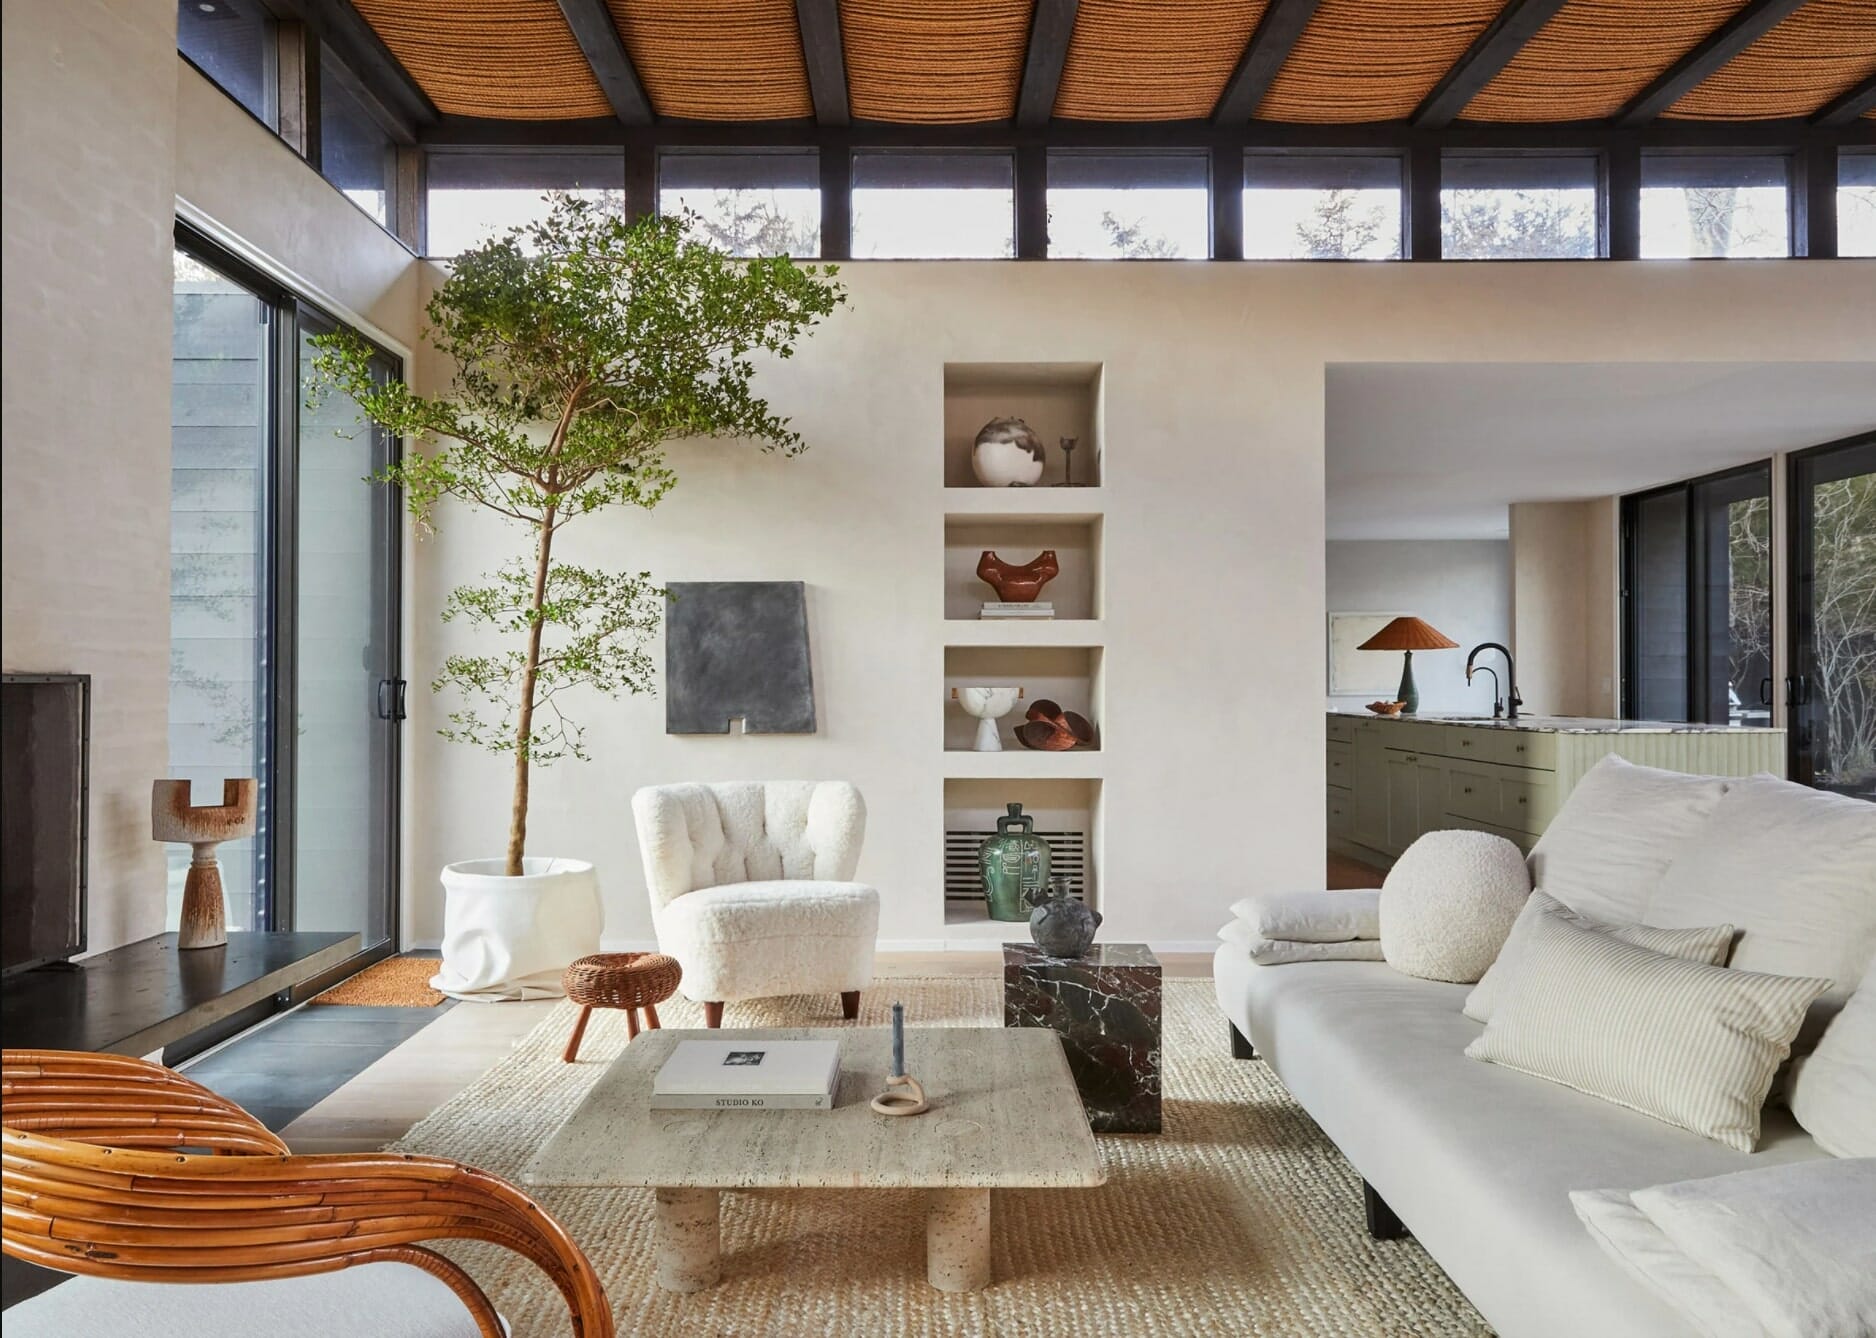 Interior Design Trends 10 10 Top Looks from Experts   Decorilla